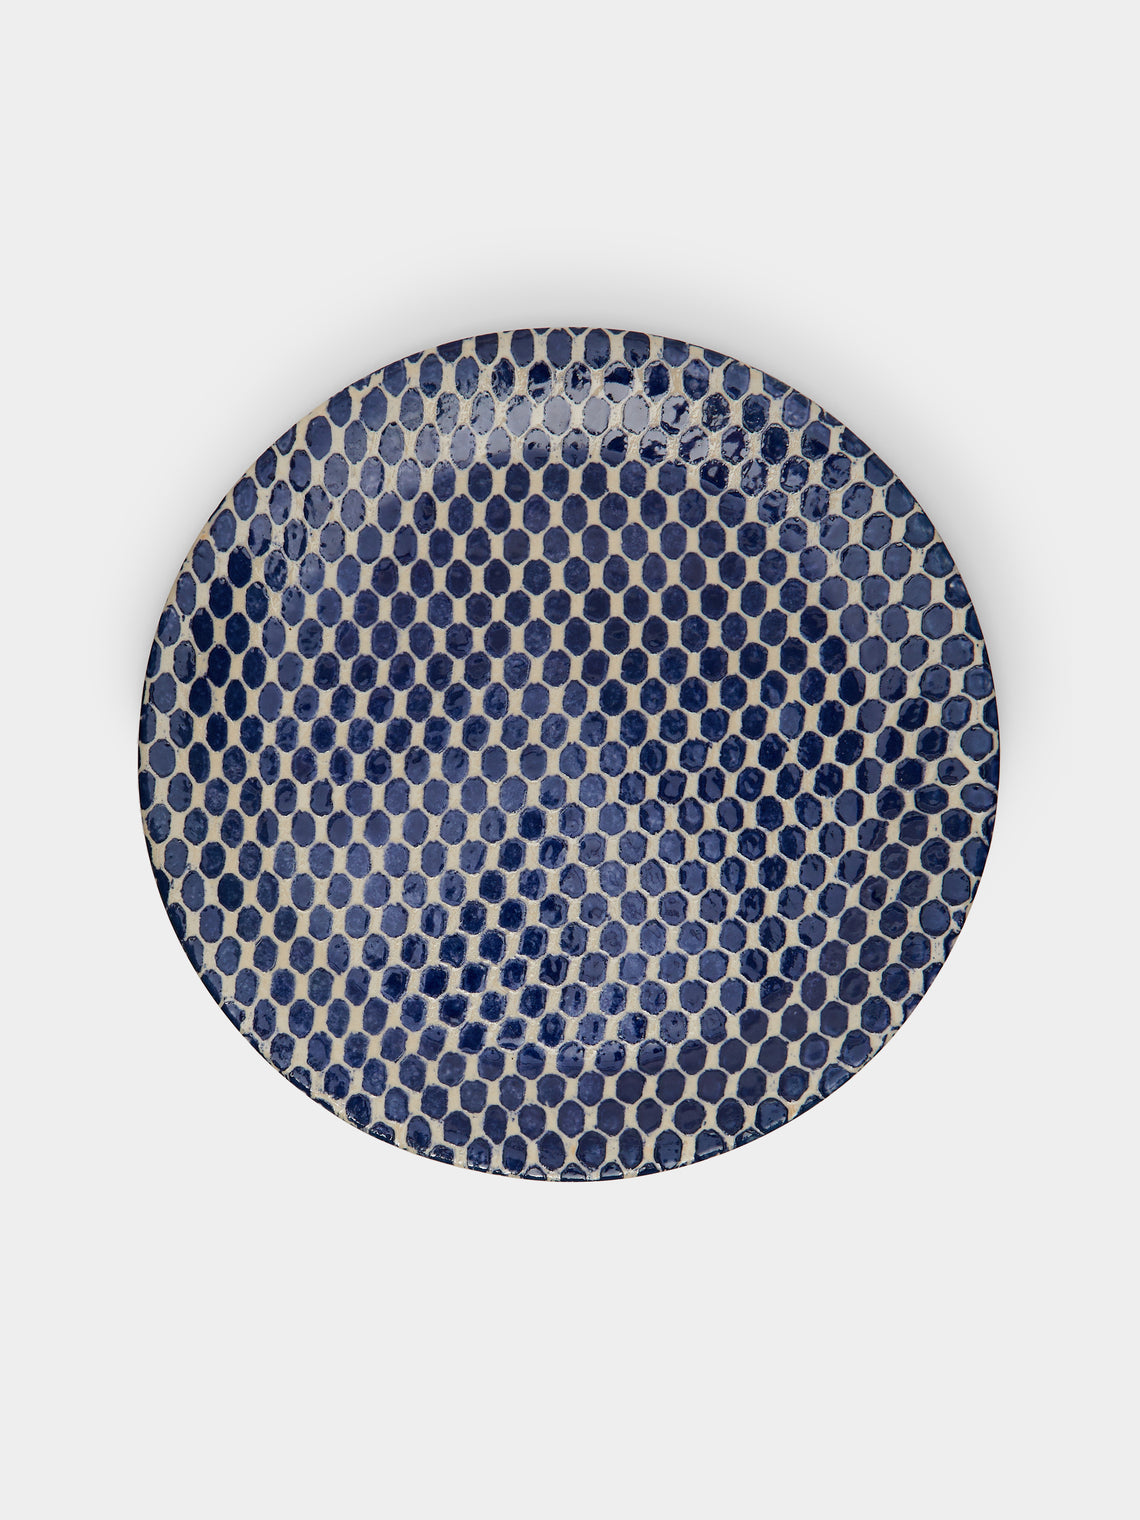 Terrafirma Ceramics - Hand-Printed Ceramic Dinner Plates (Set of 4) - Blue - ABASK - 